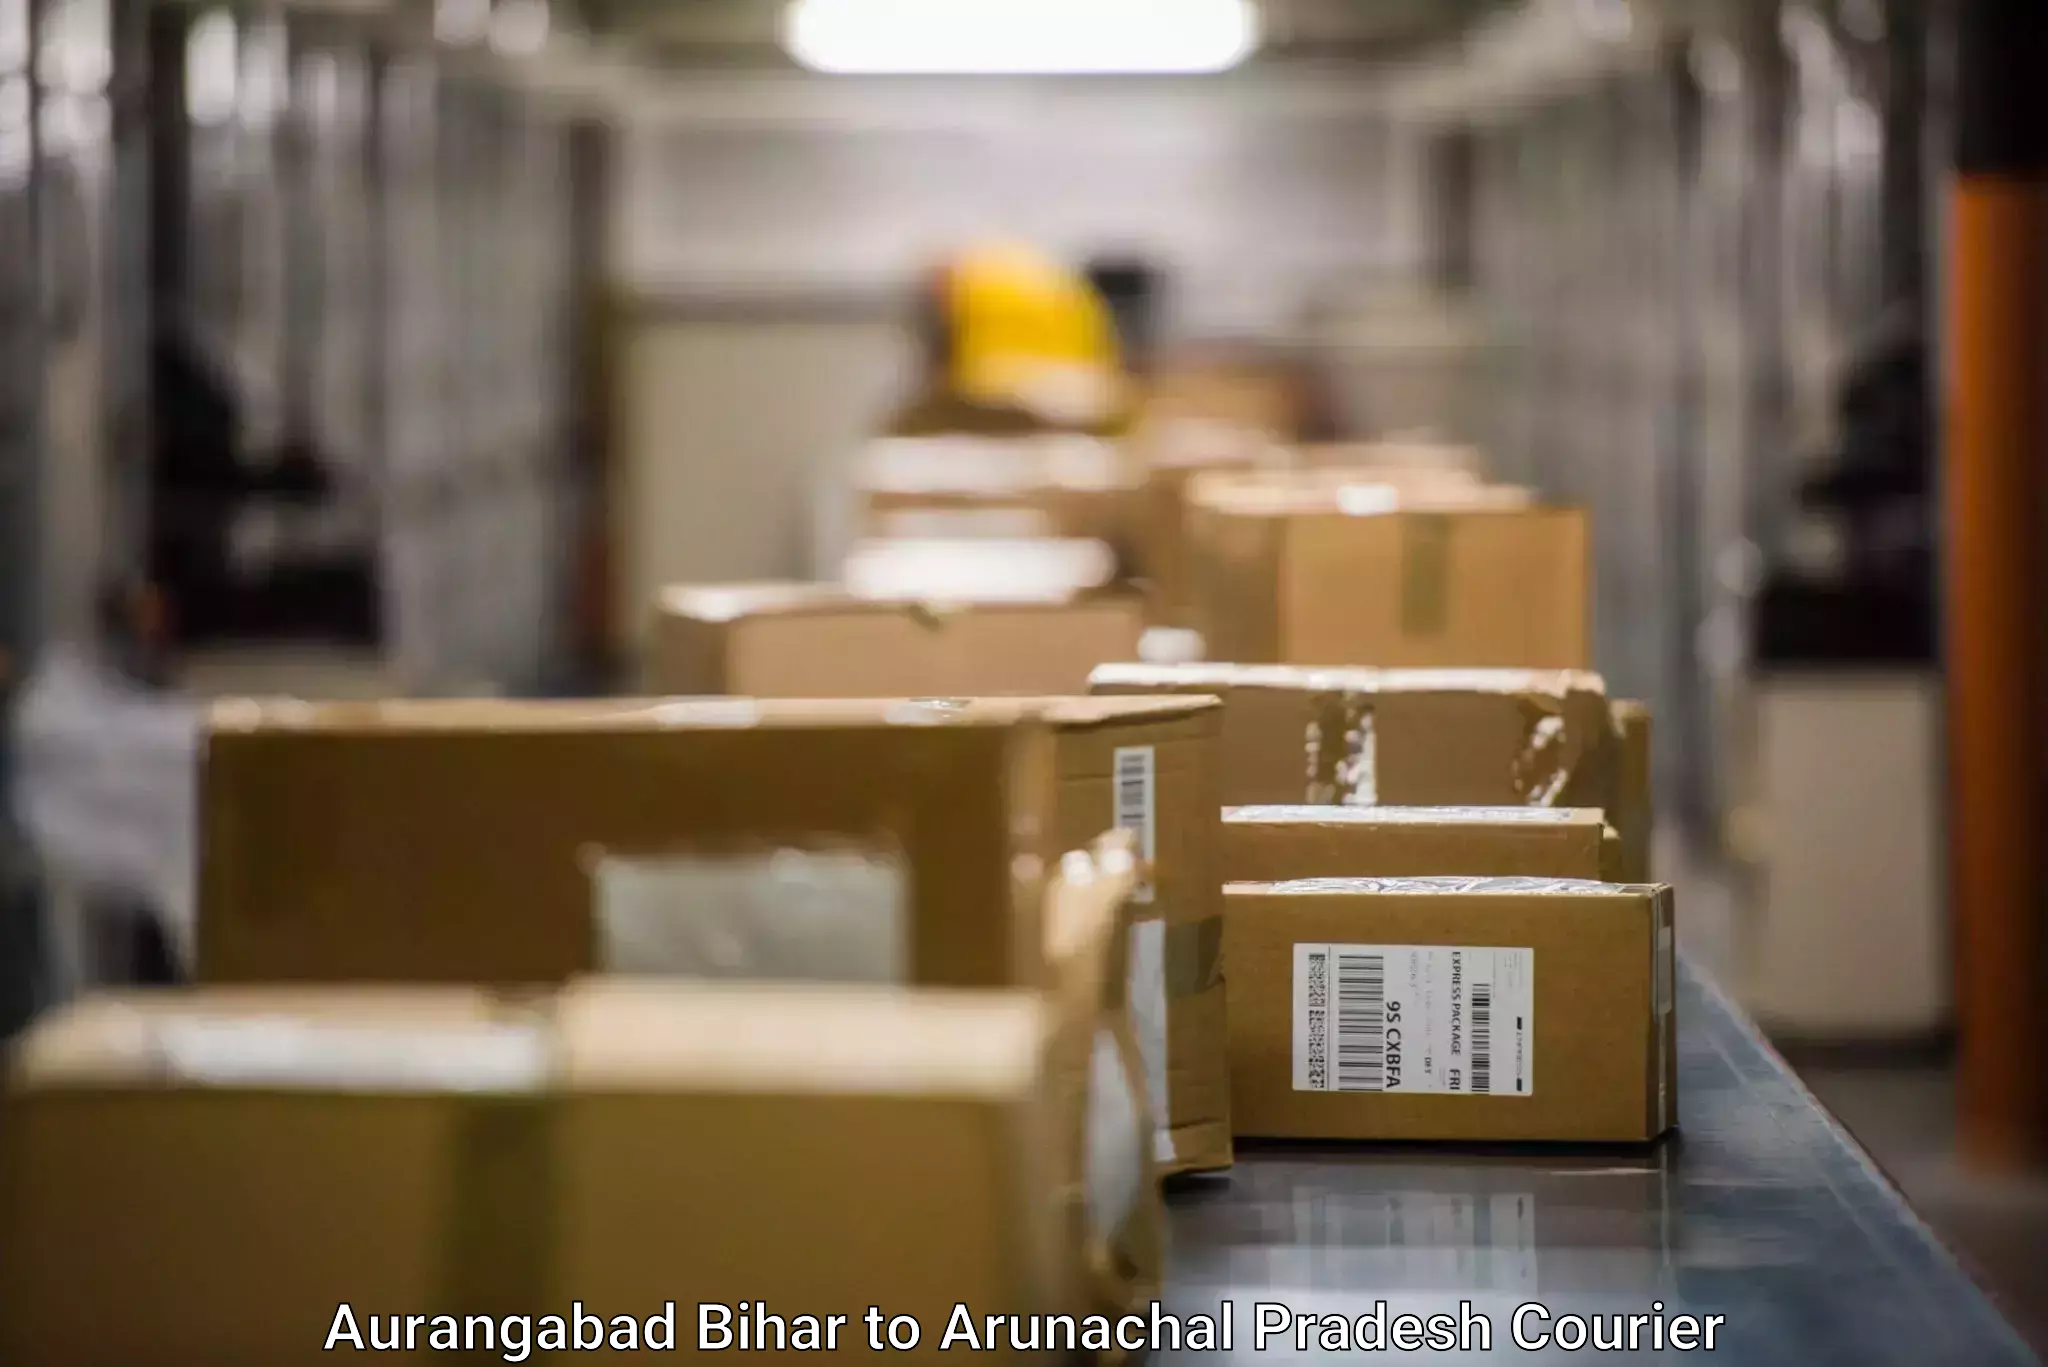 Professional parcel services Aurangabad Bihar to Lower Subansiri